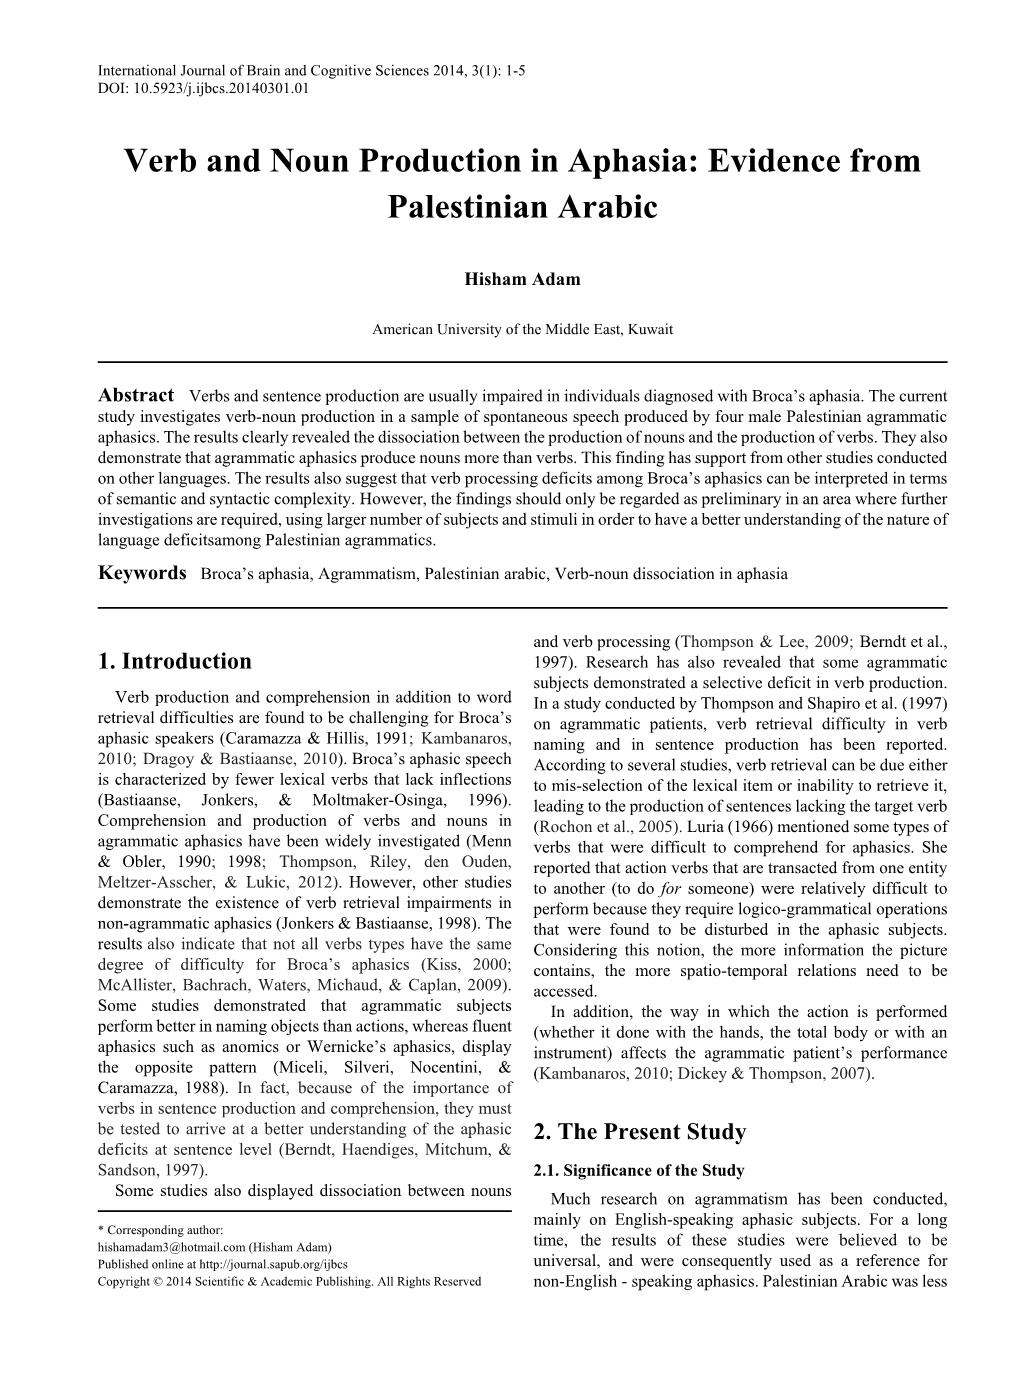 Broca's Aphasia, Agrammatism, Palestinian Arabic, Verb-Noun